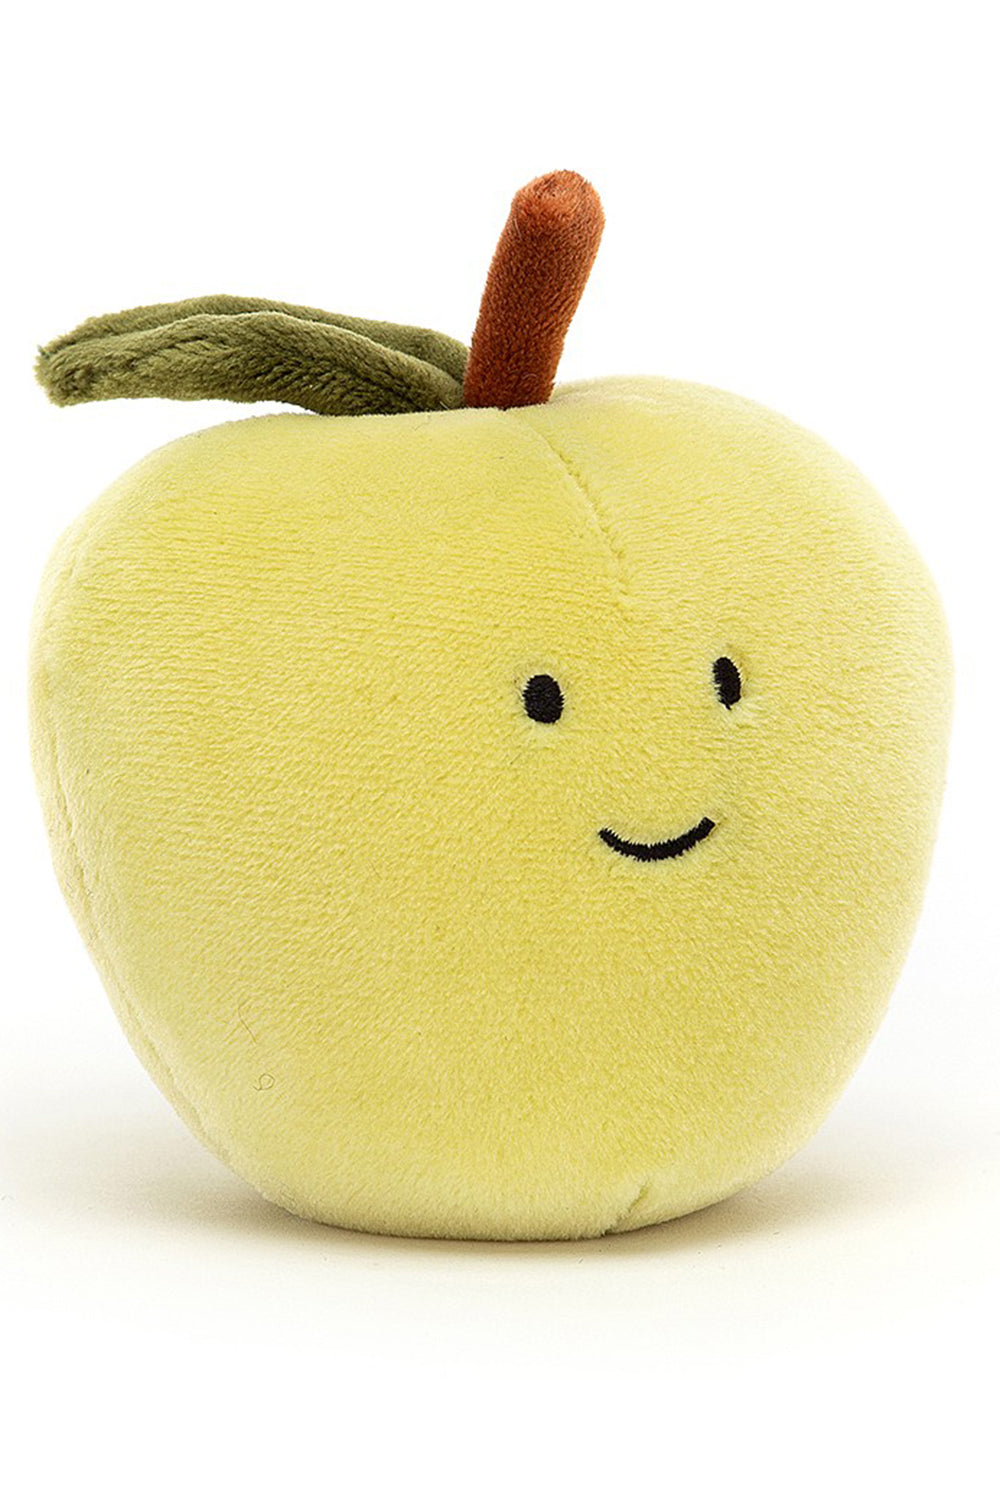 JELLYCAT Fabulous Fruit - Apple